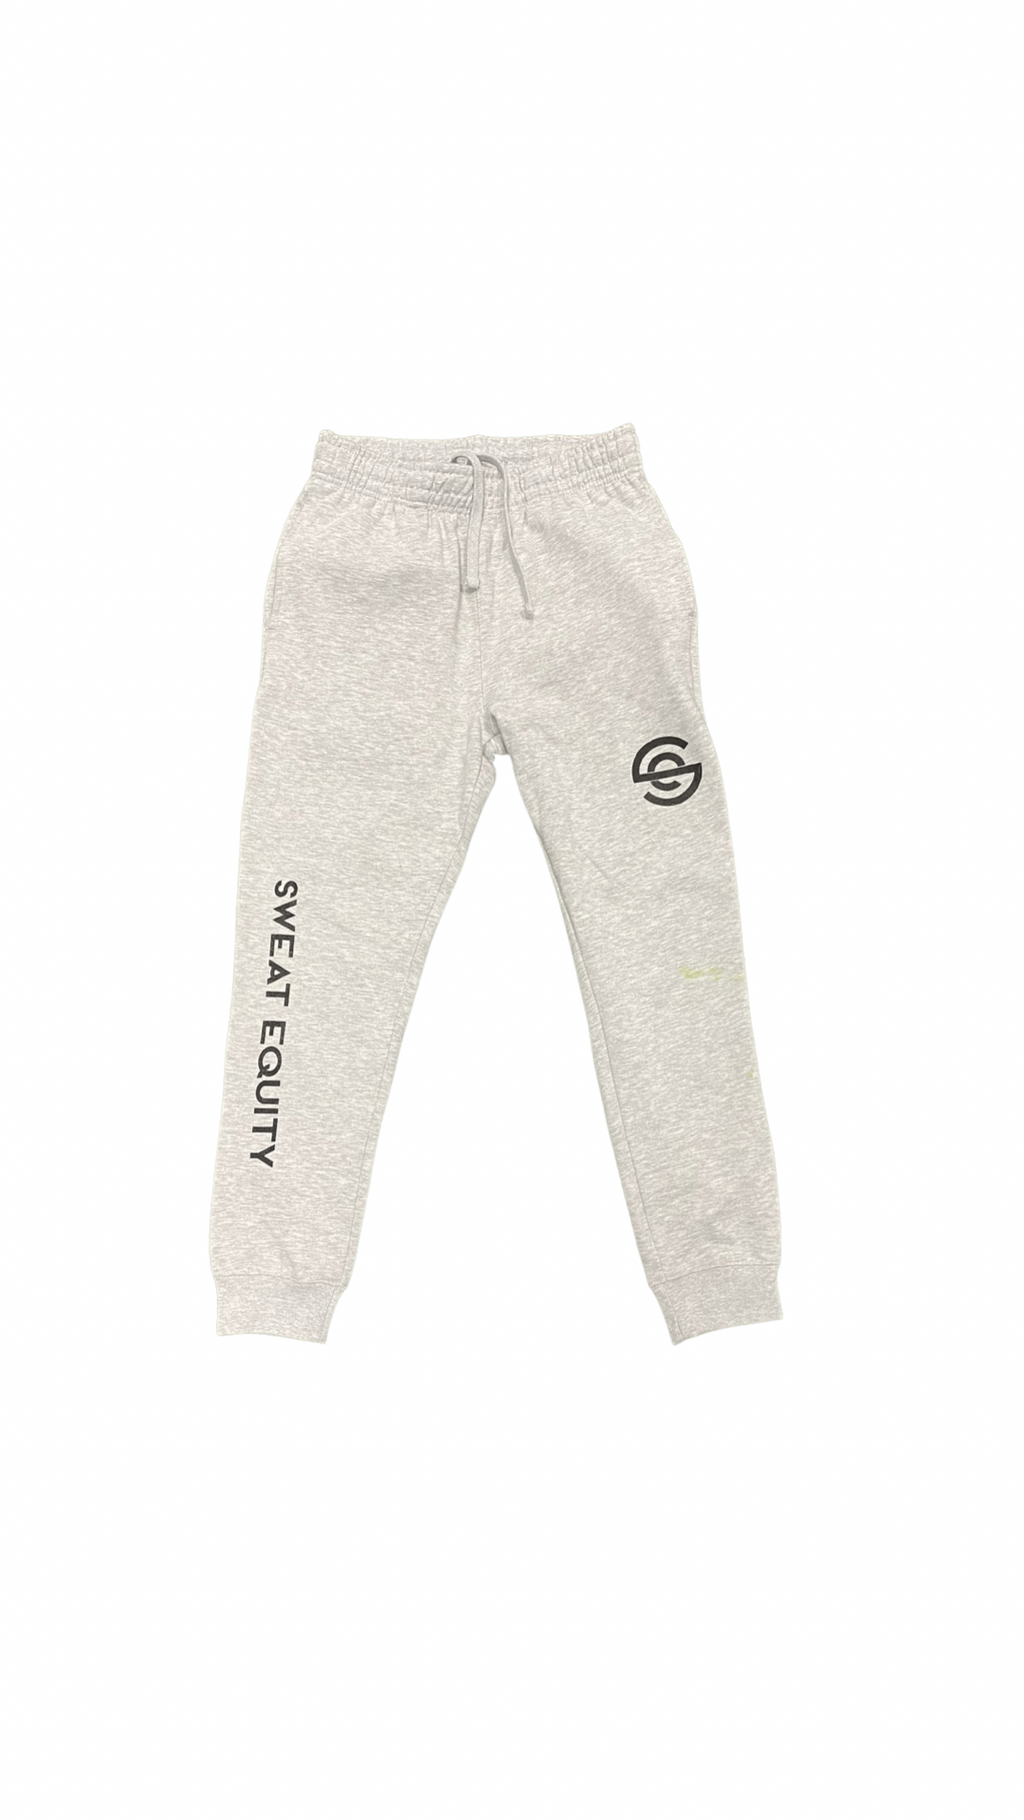 Grey & Black Athlesiure Sweatpants 22'